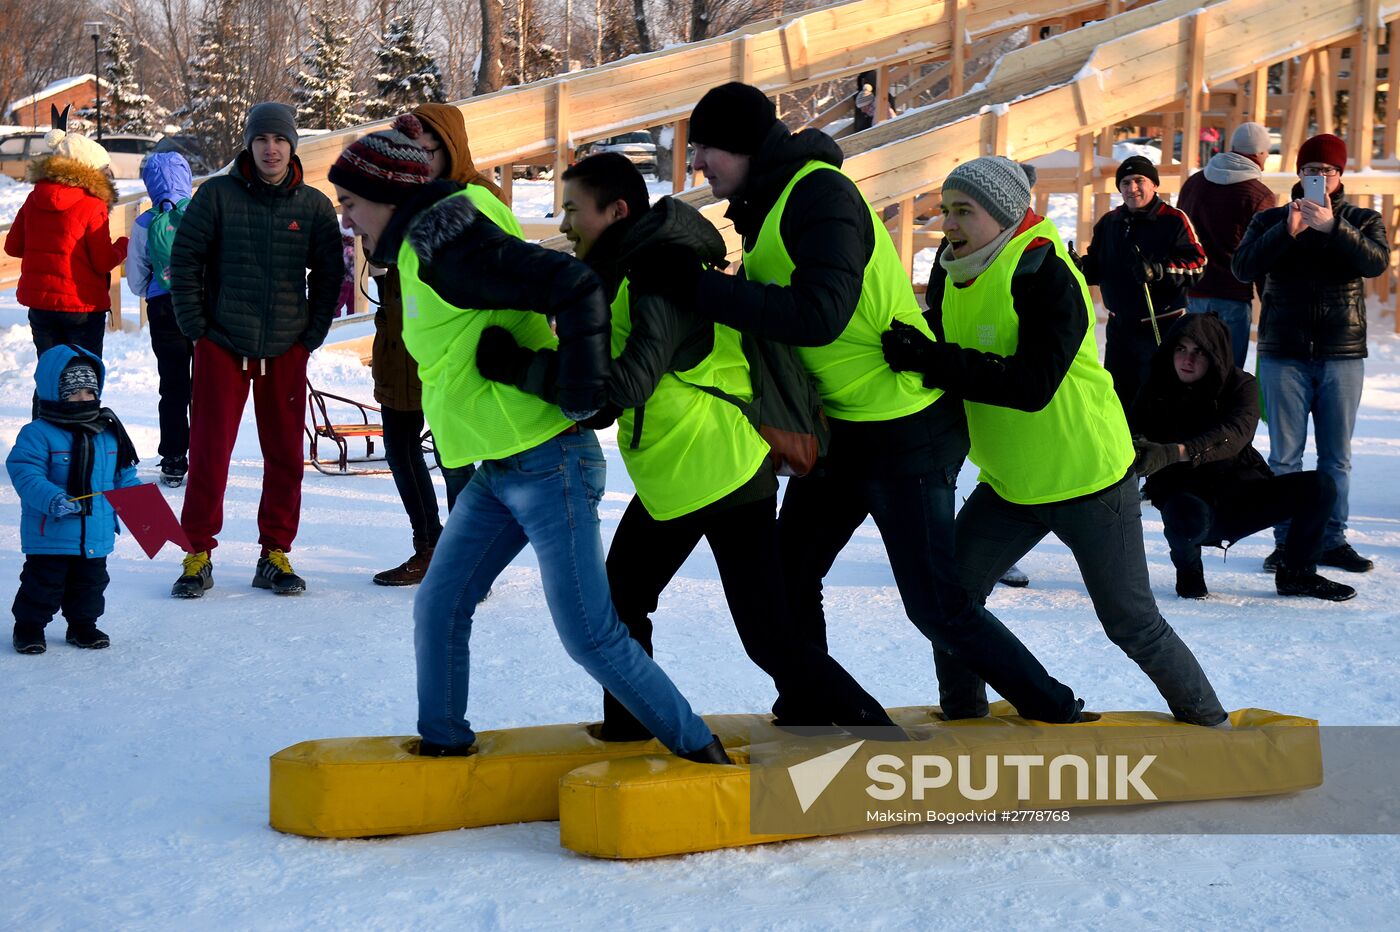 Tatyana Cup Student Winter Games in Kazan